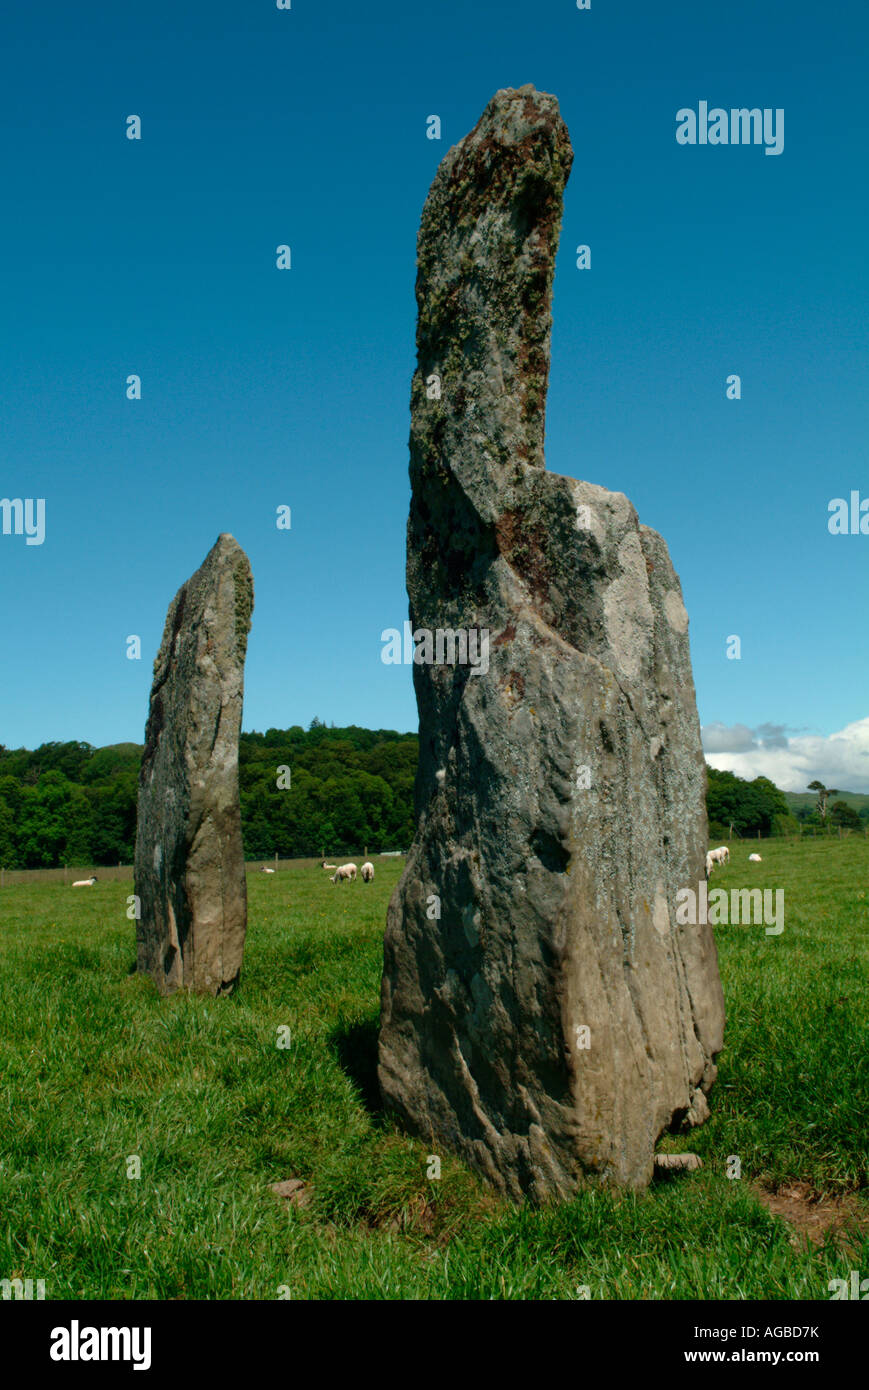 The Nether Largie standing stones, Kilmartin Stock Photo